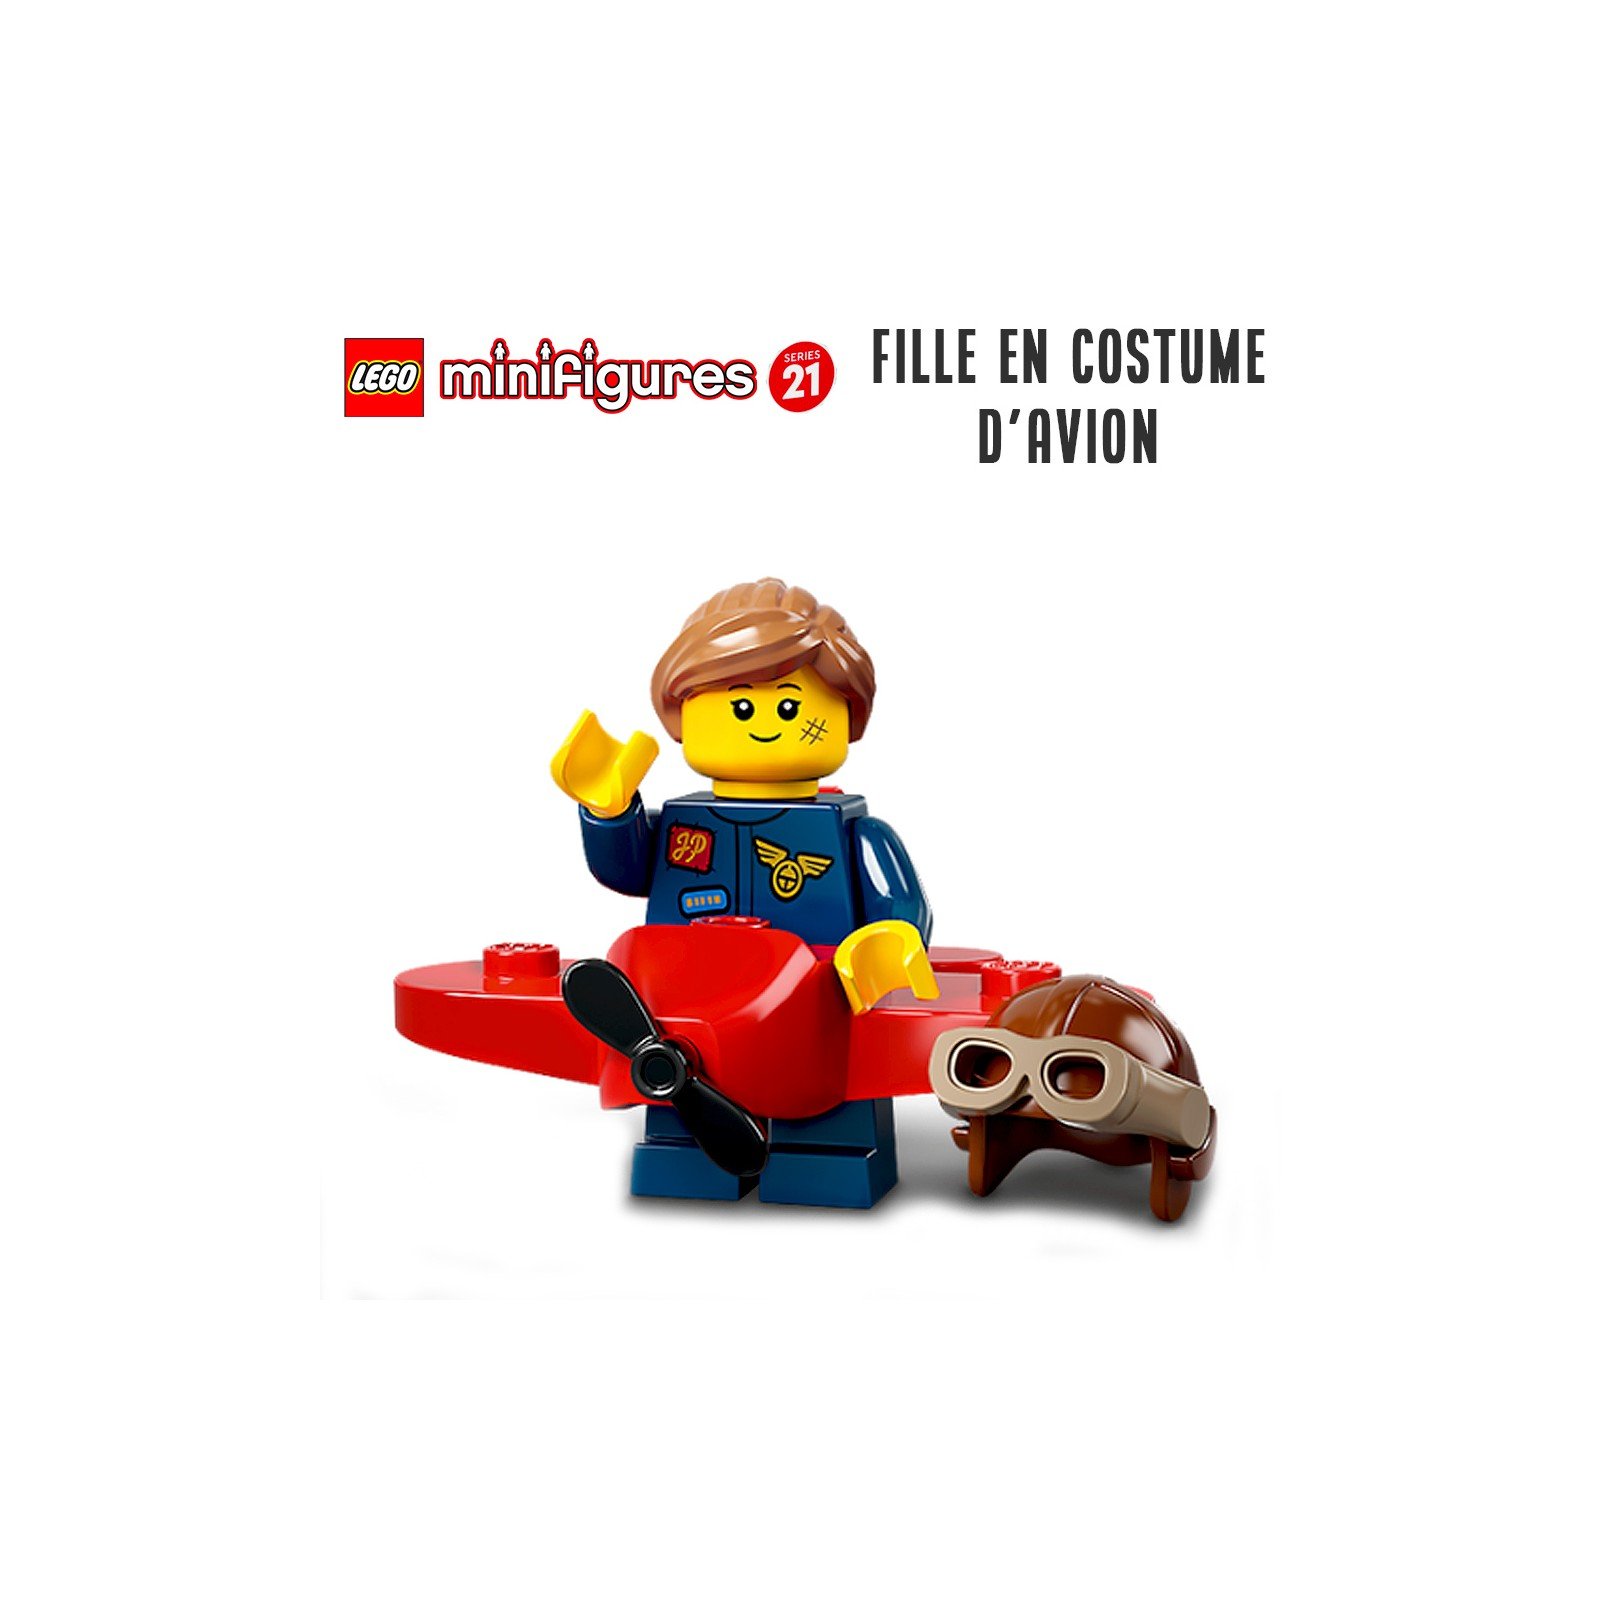 Minifigure LEGO® Série 21 - La fille en costume d'avion